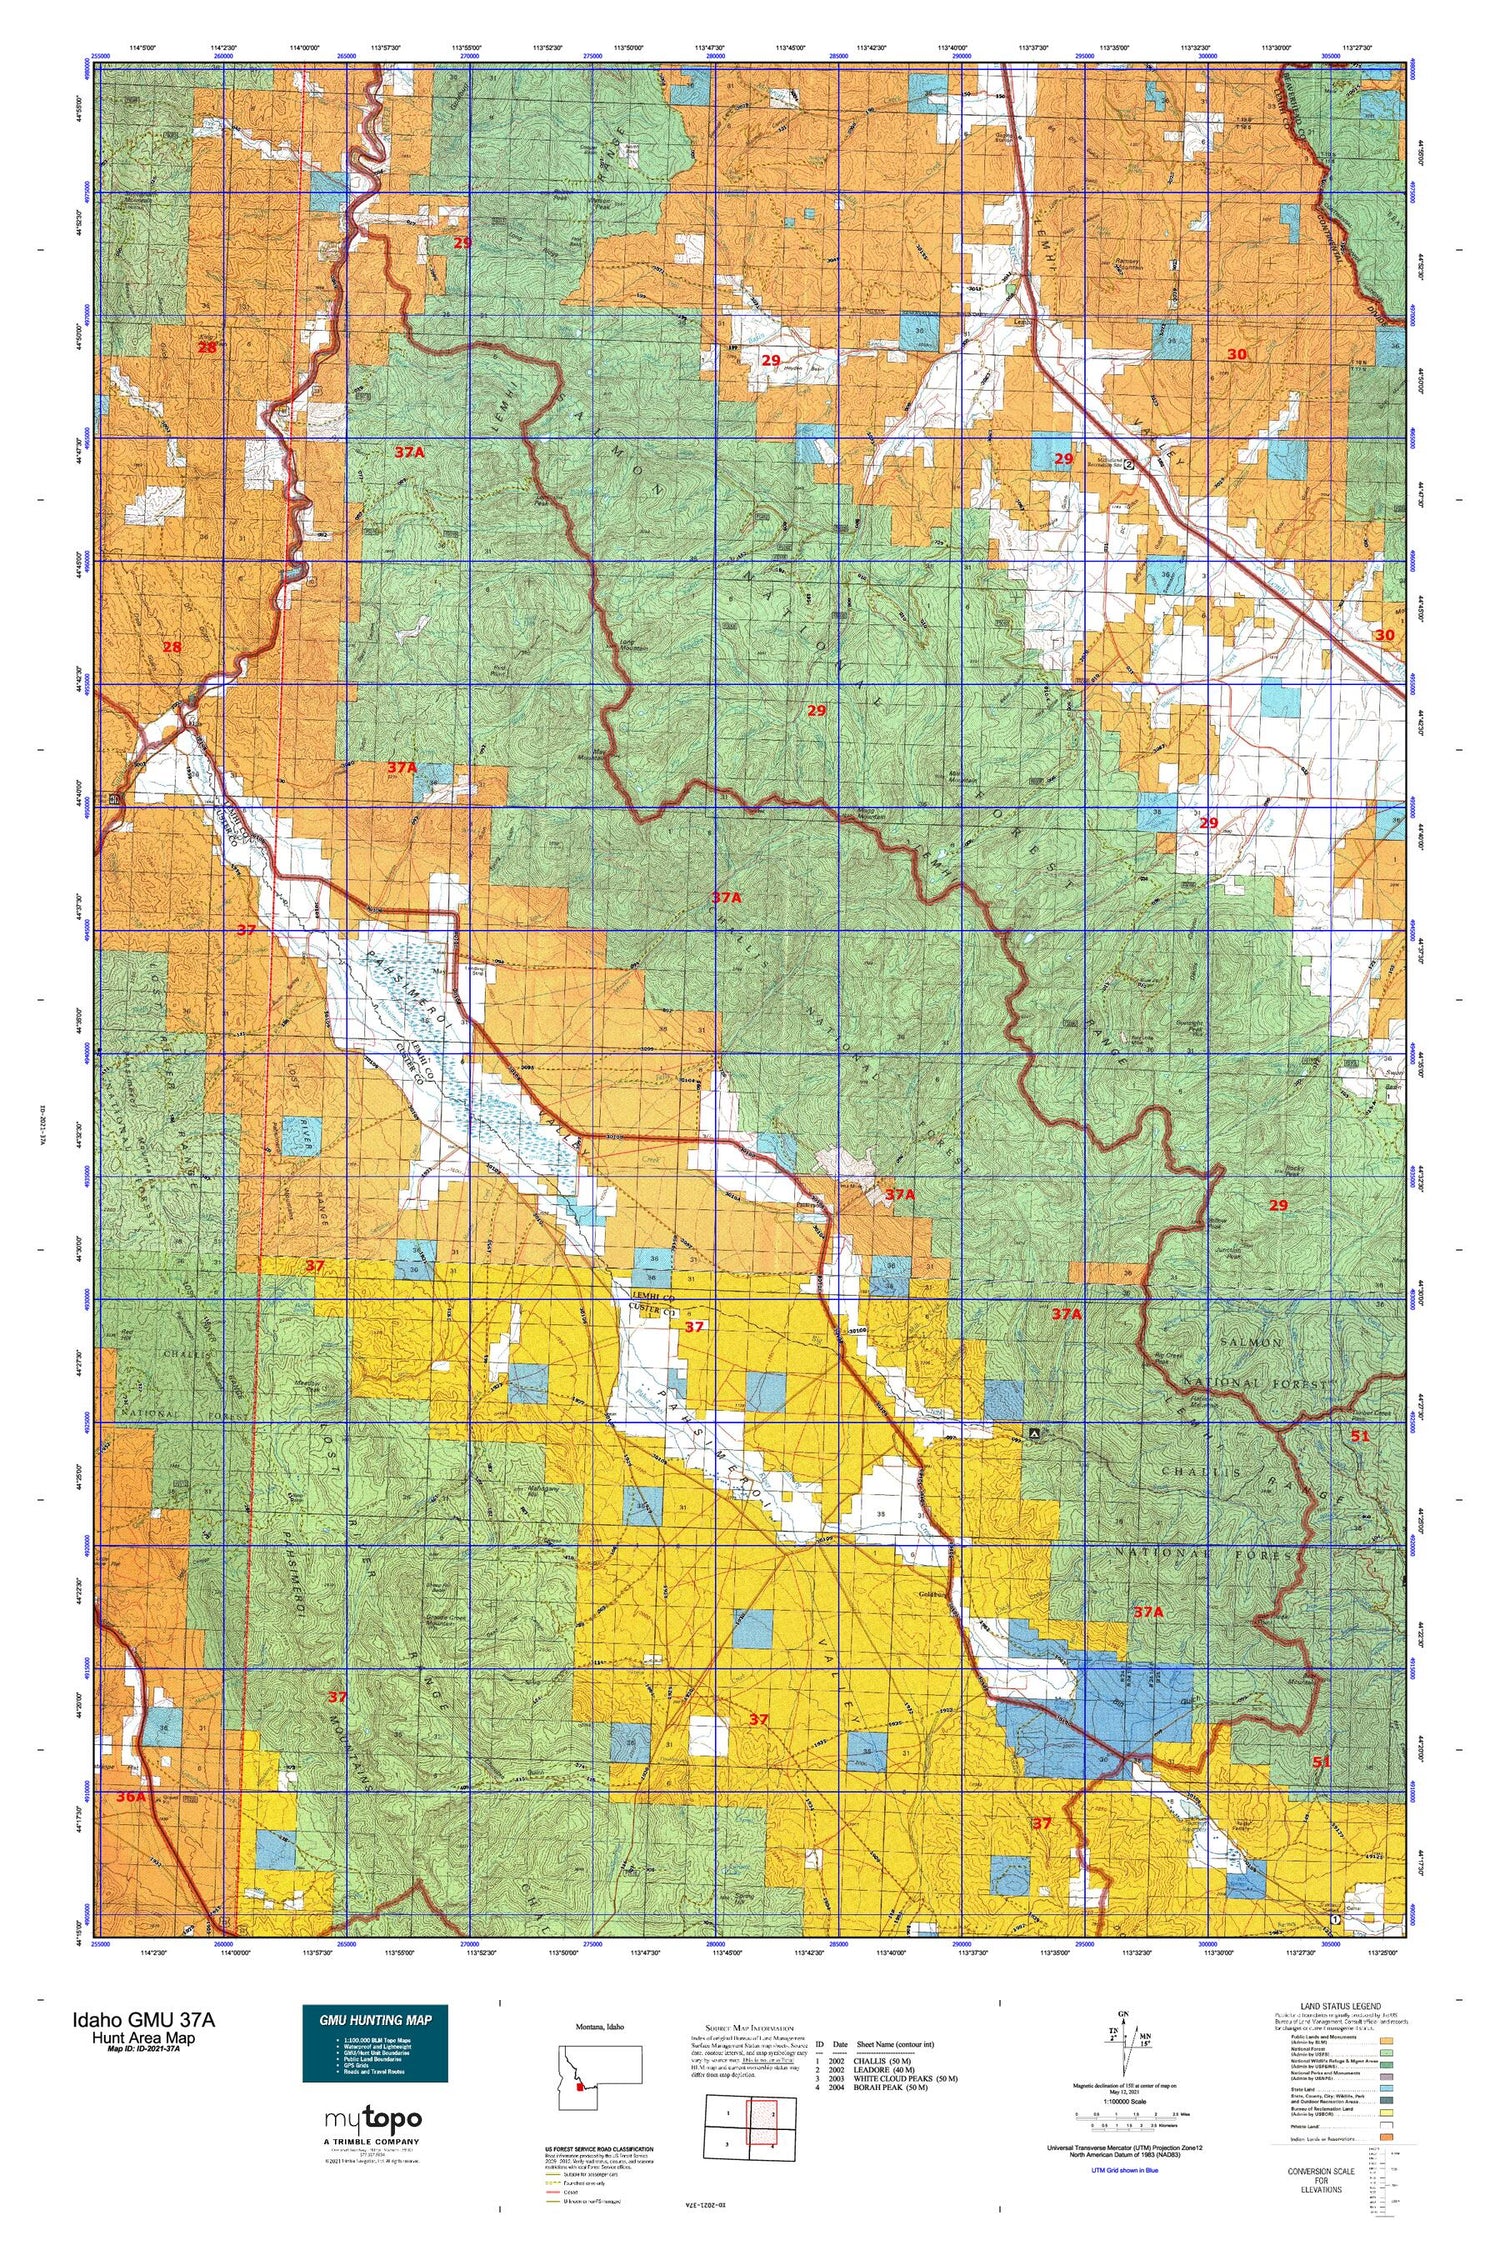 Idaho GMU 37A Map Image